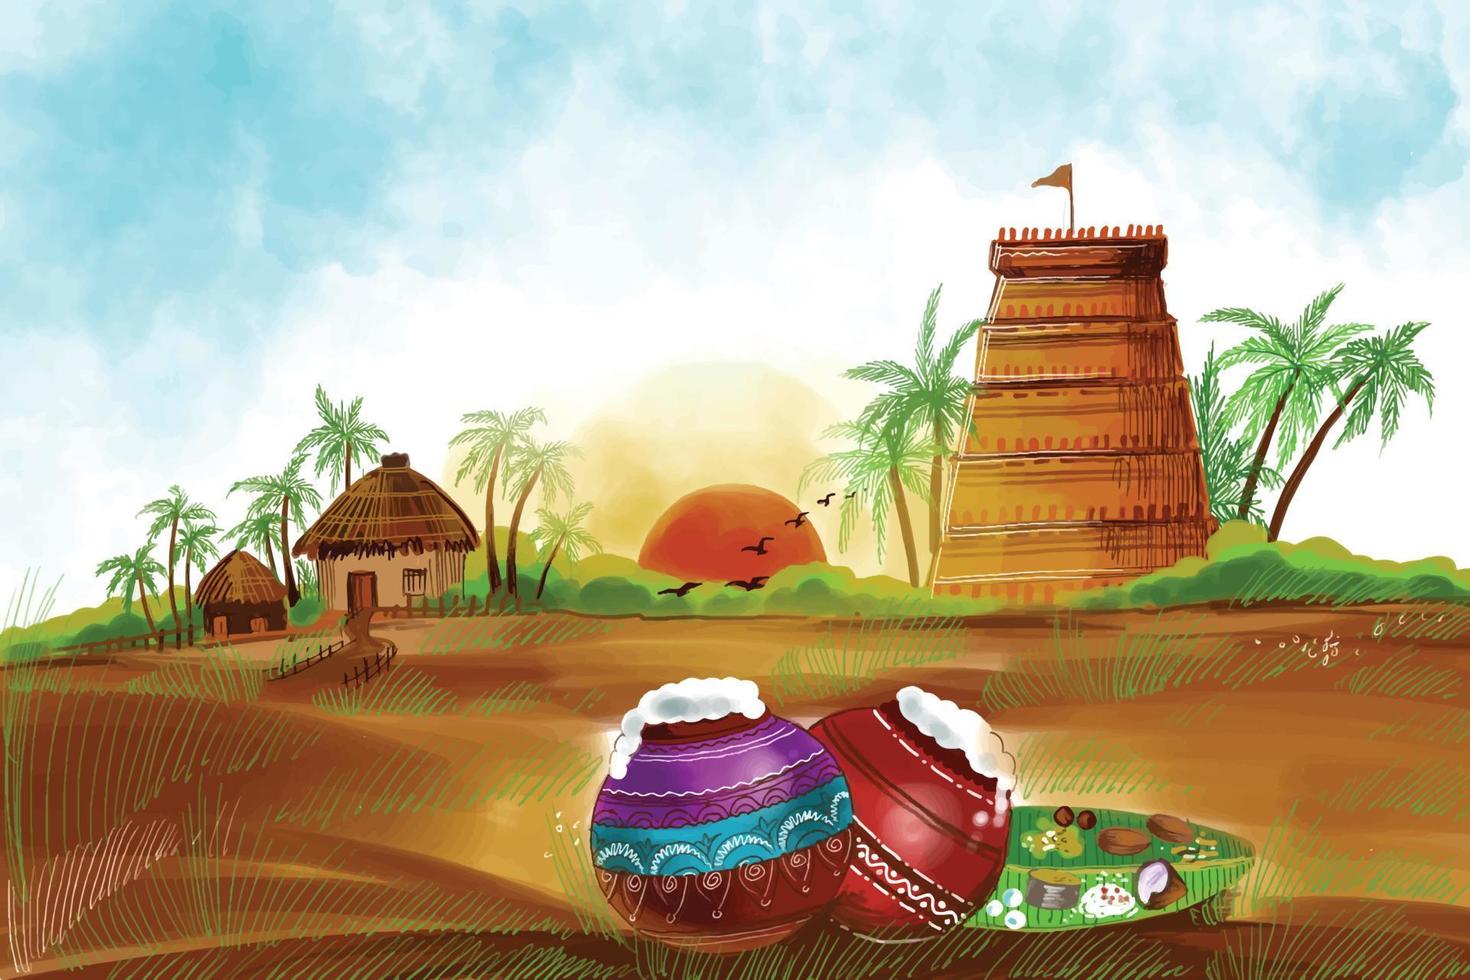 Happy pongal holiday harvest festival celebration card background vector